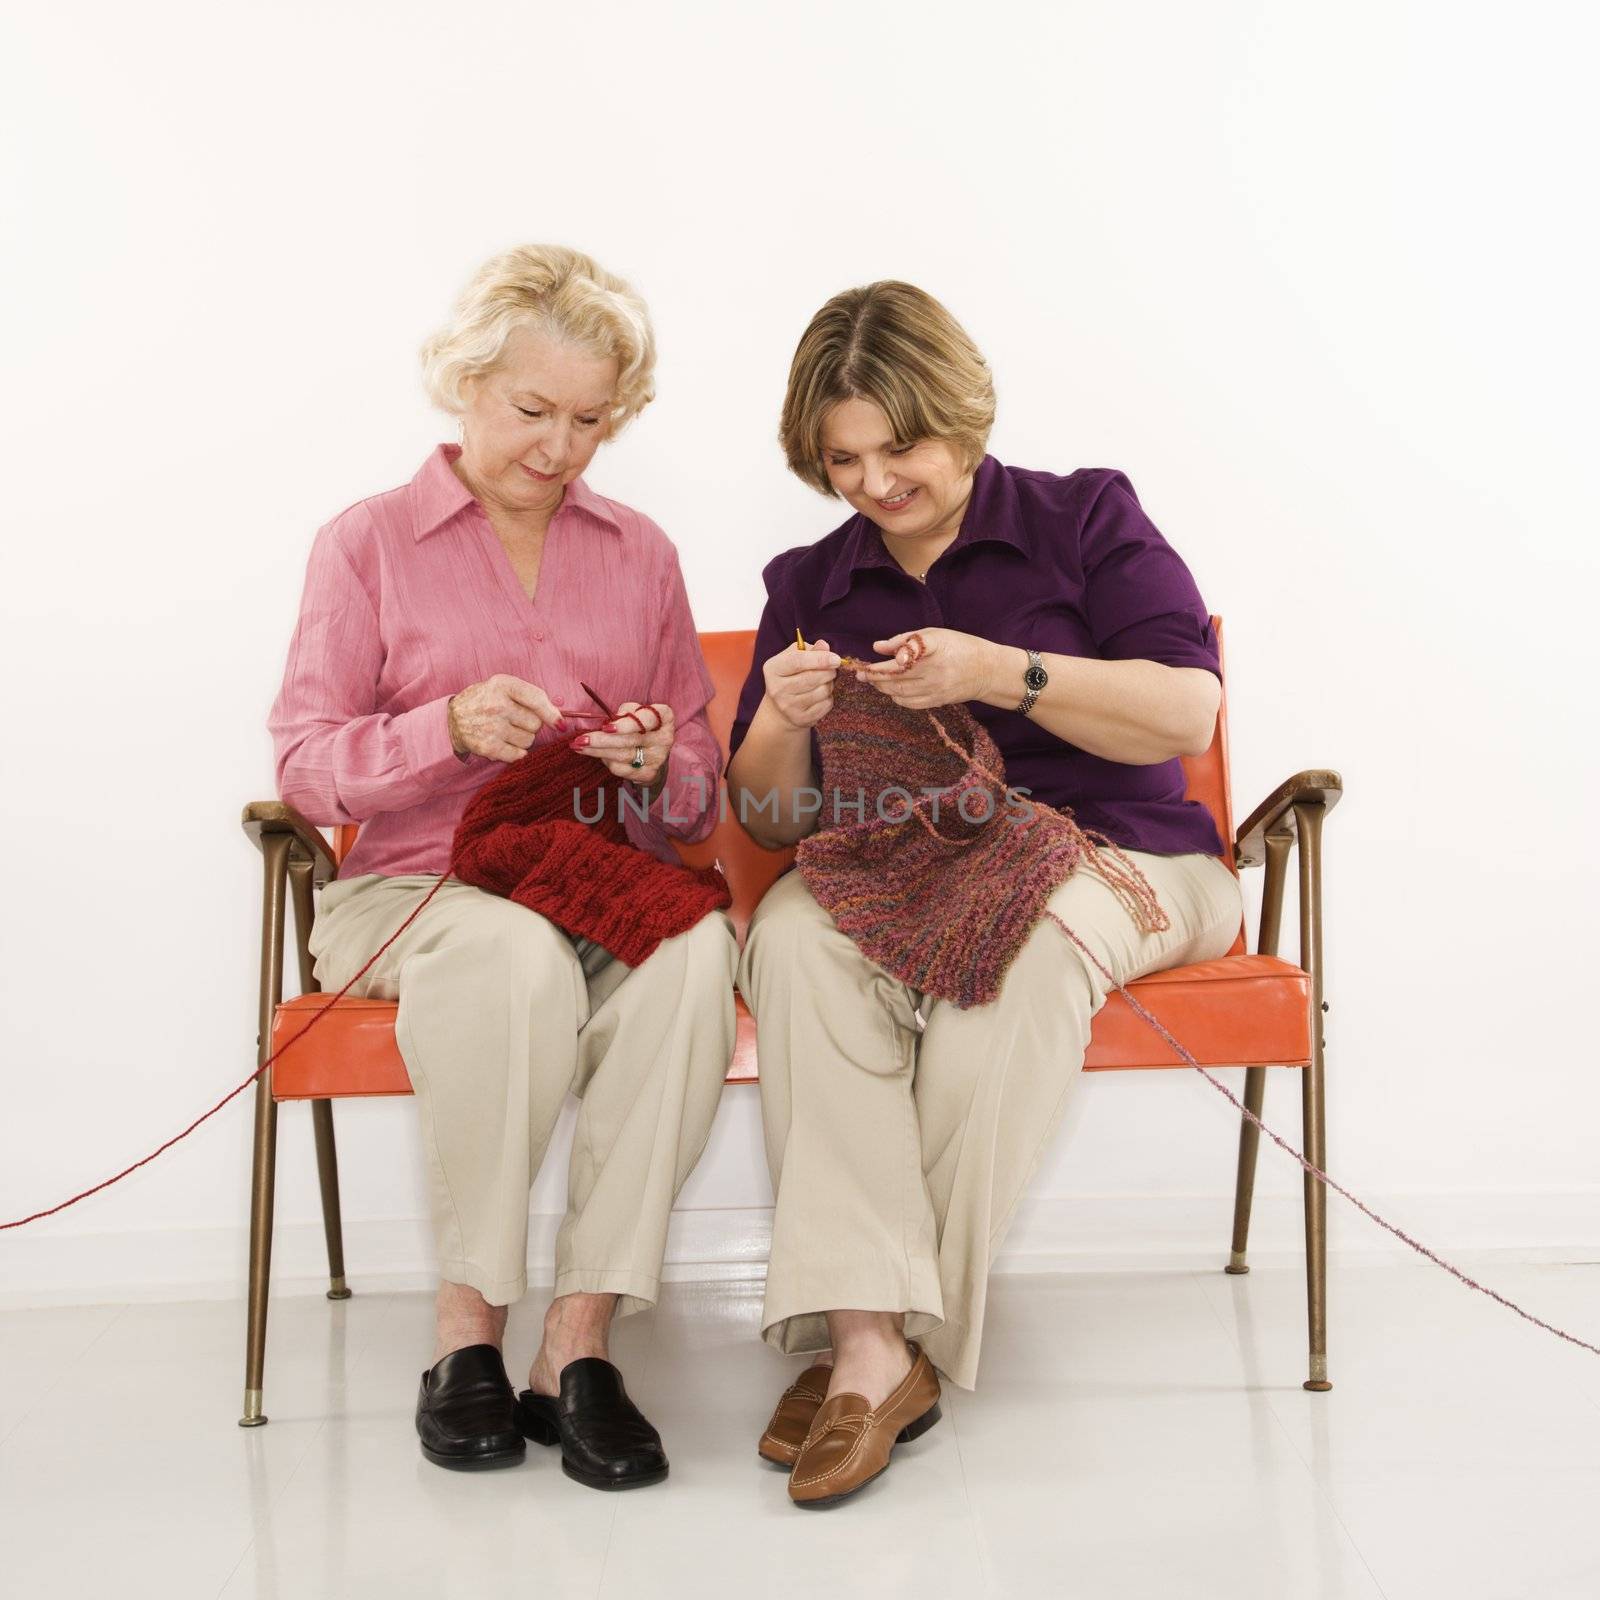 Two women knitting. by iofoto